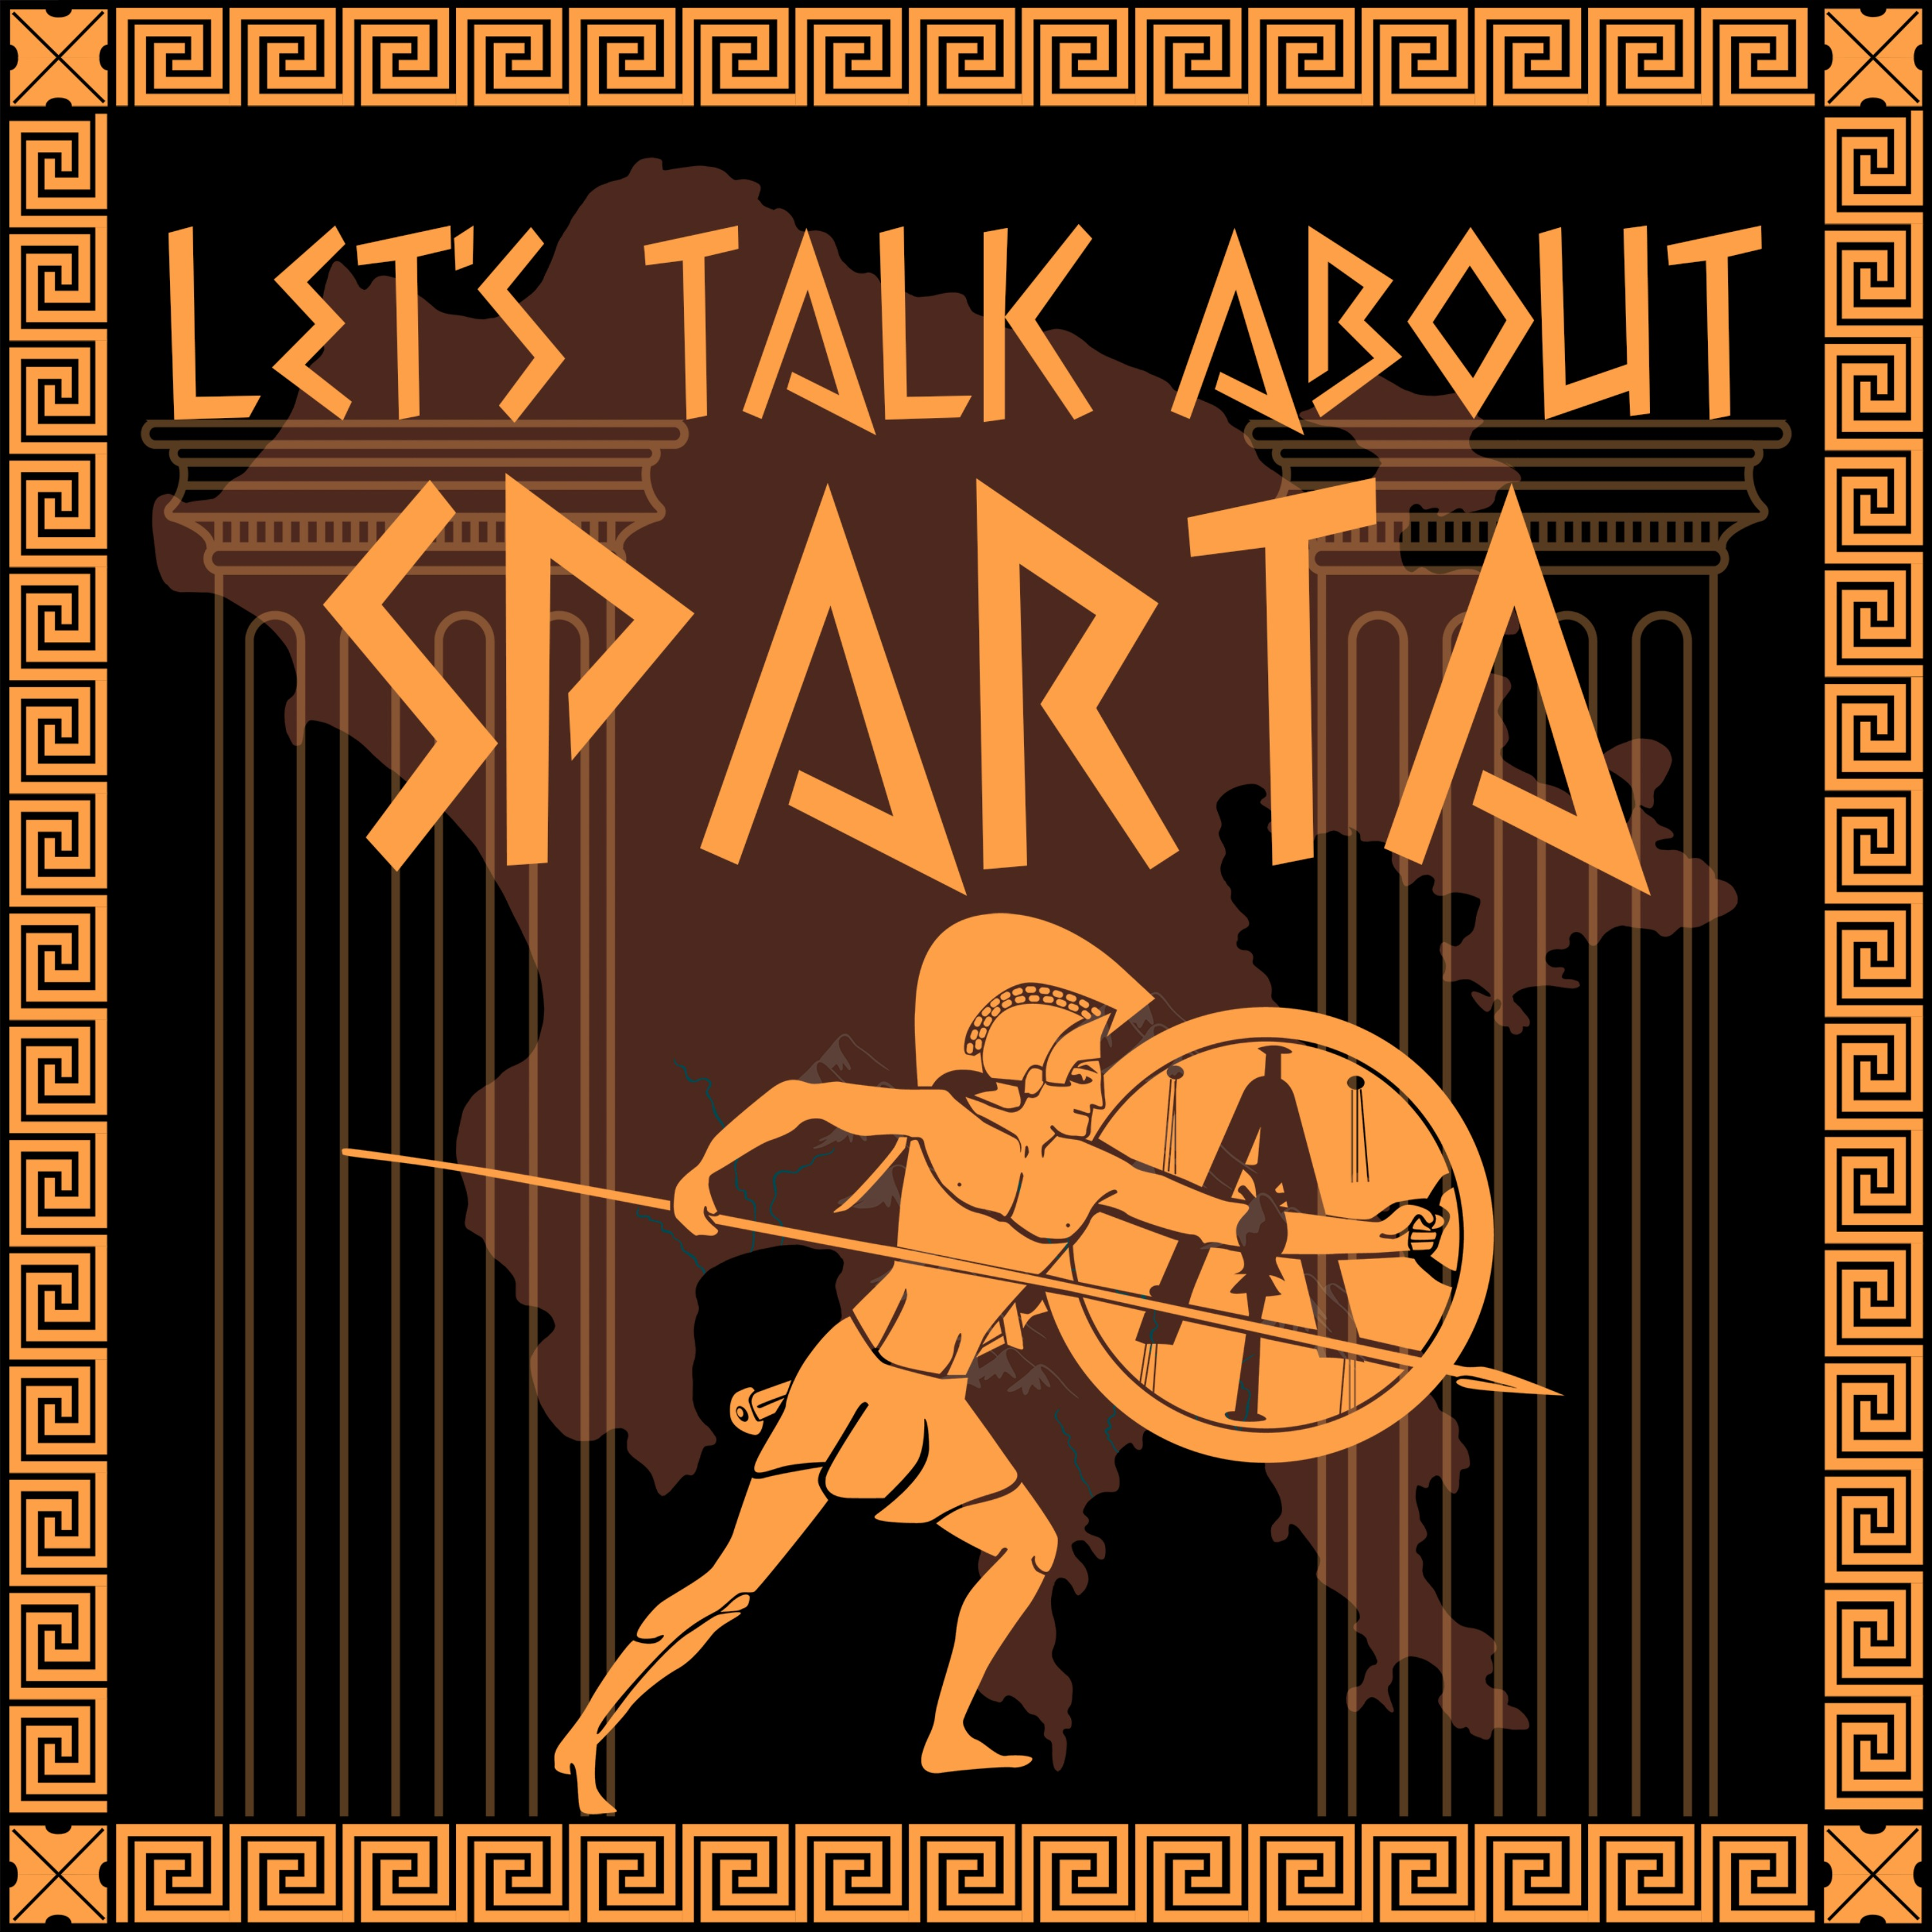 COMING SOON! Spartan Myth-making & Mirage